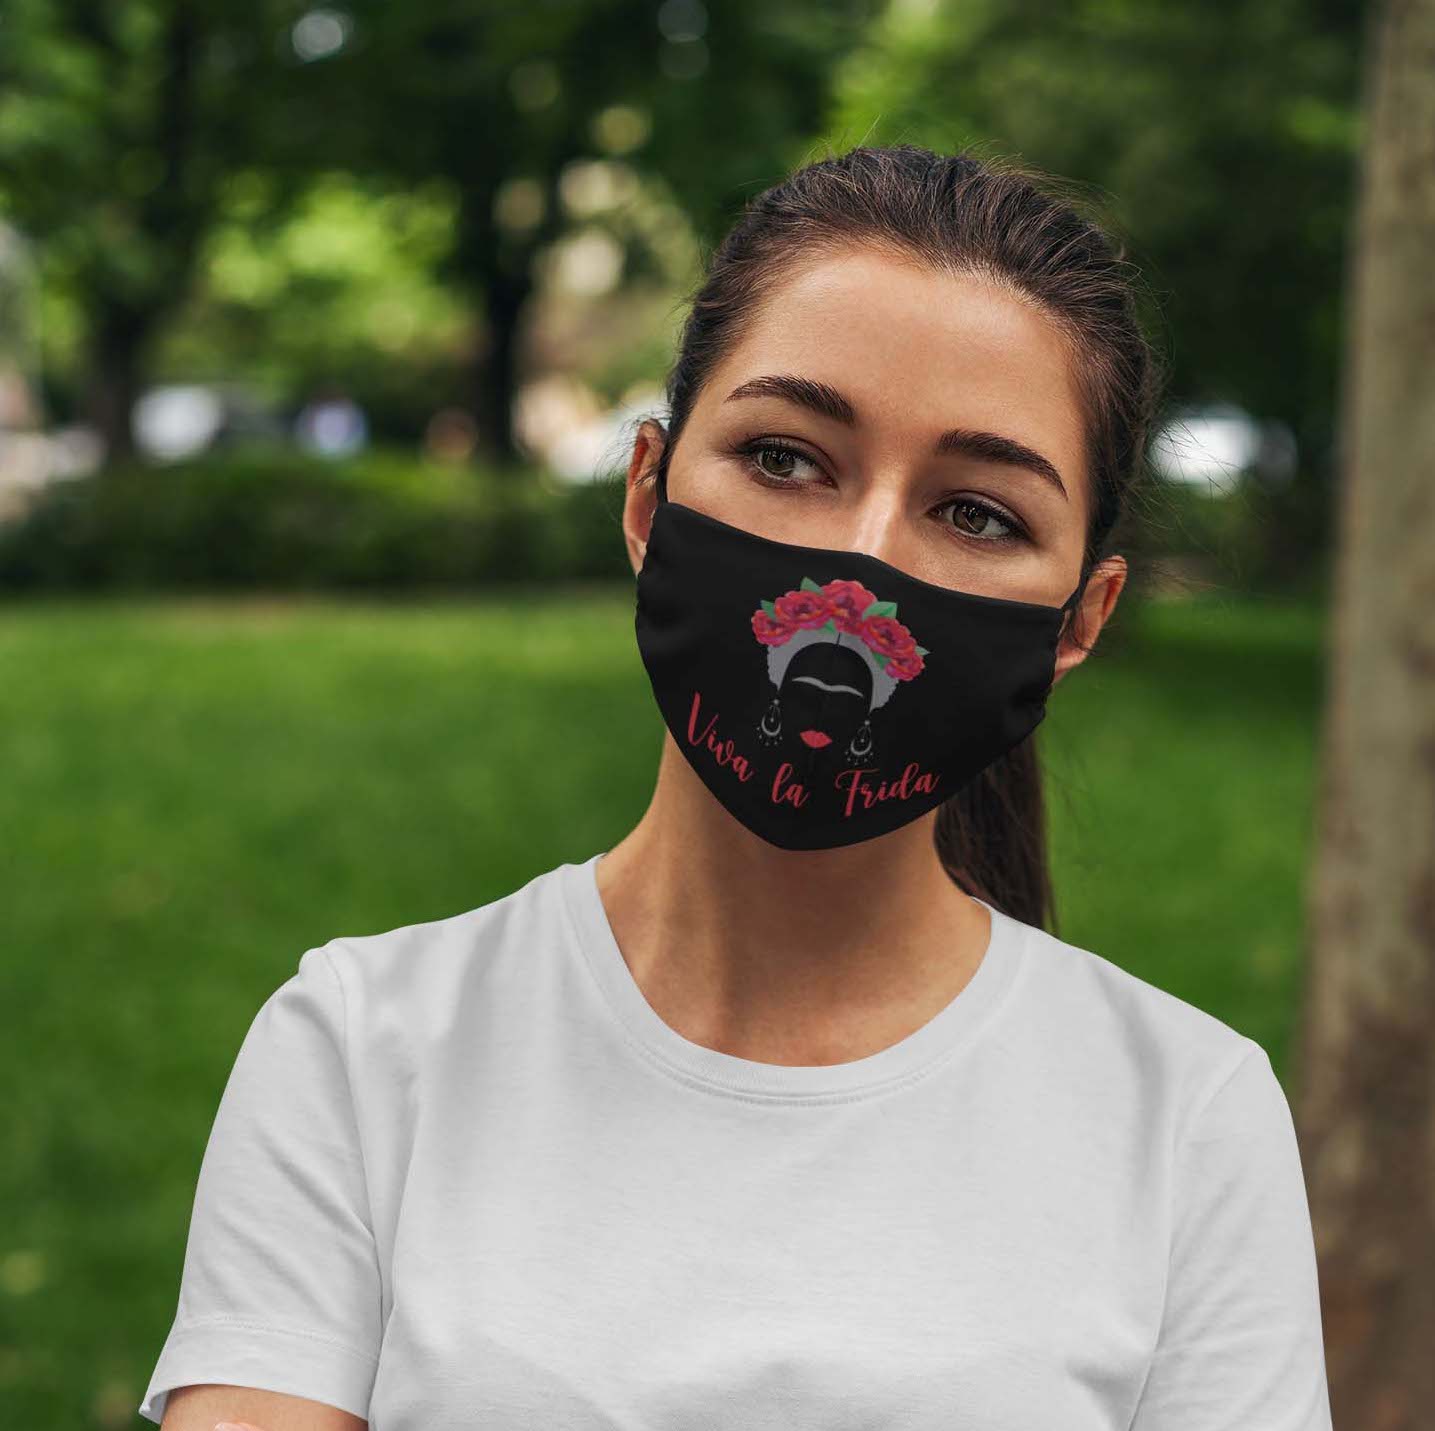 Viva la frida kahlo feminist anti pollution face mask - maria